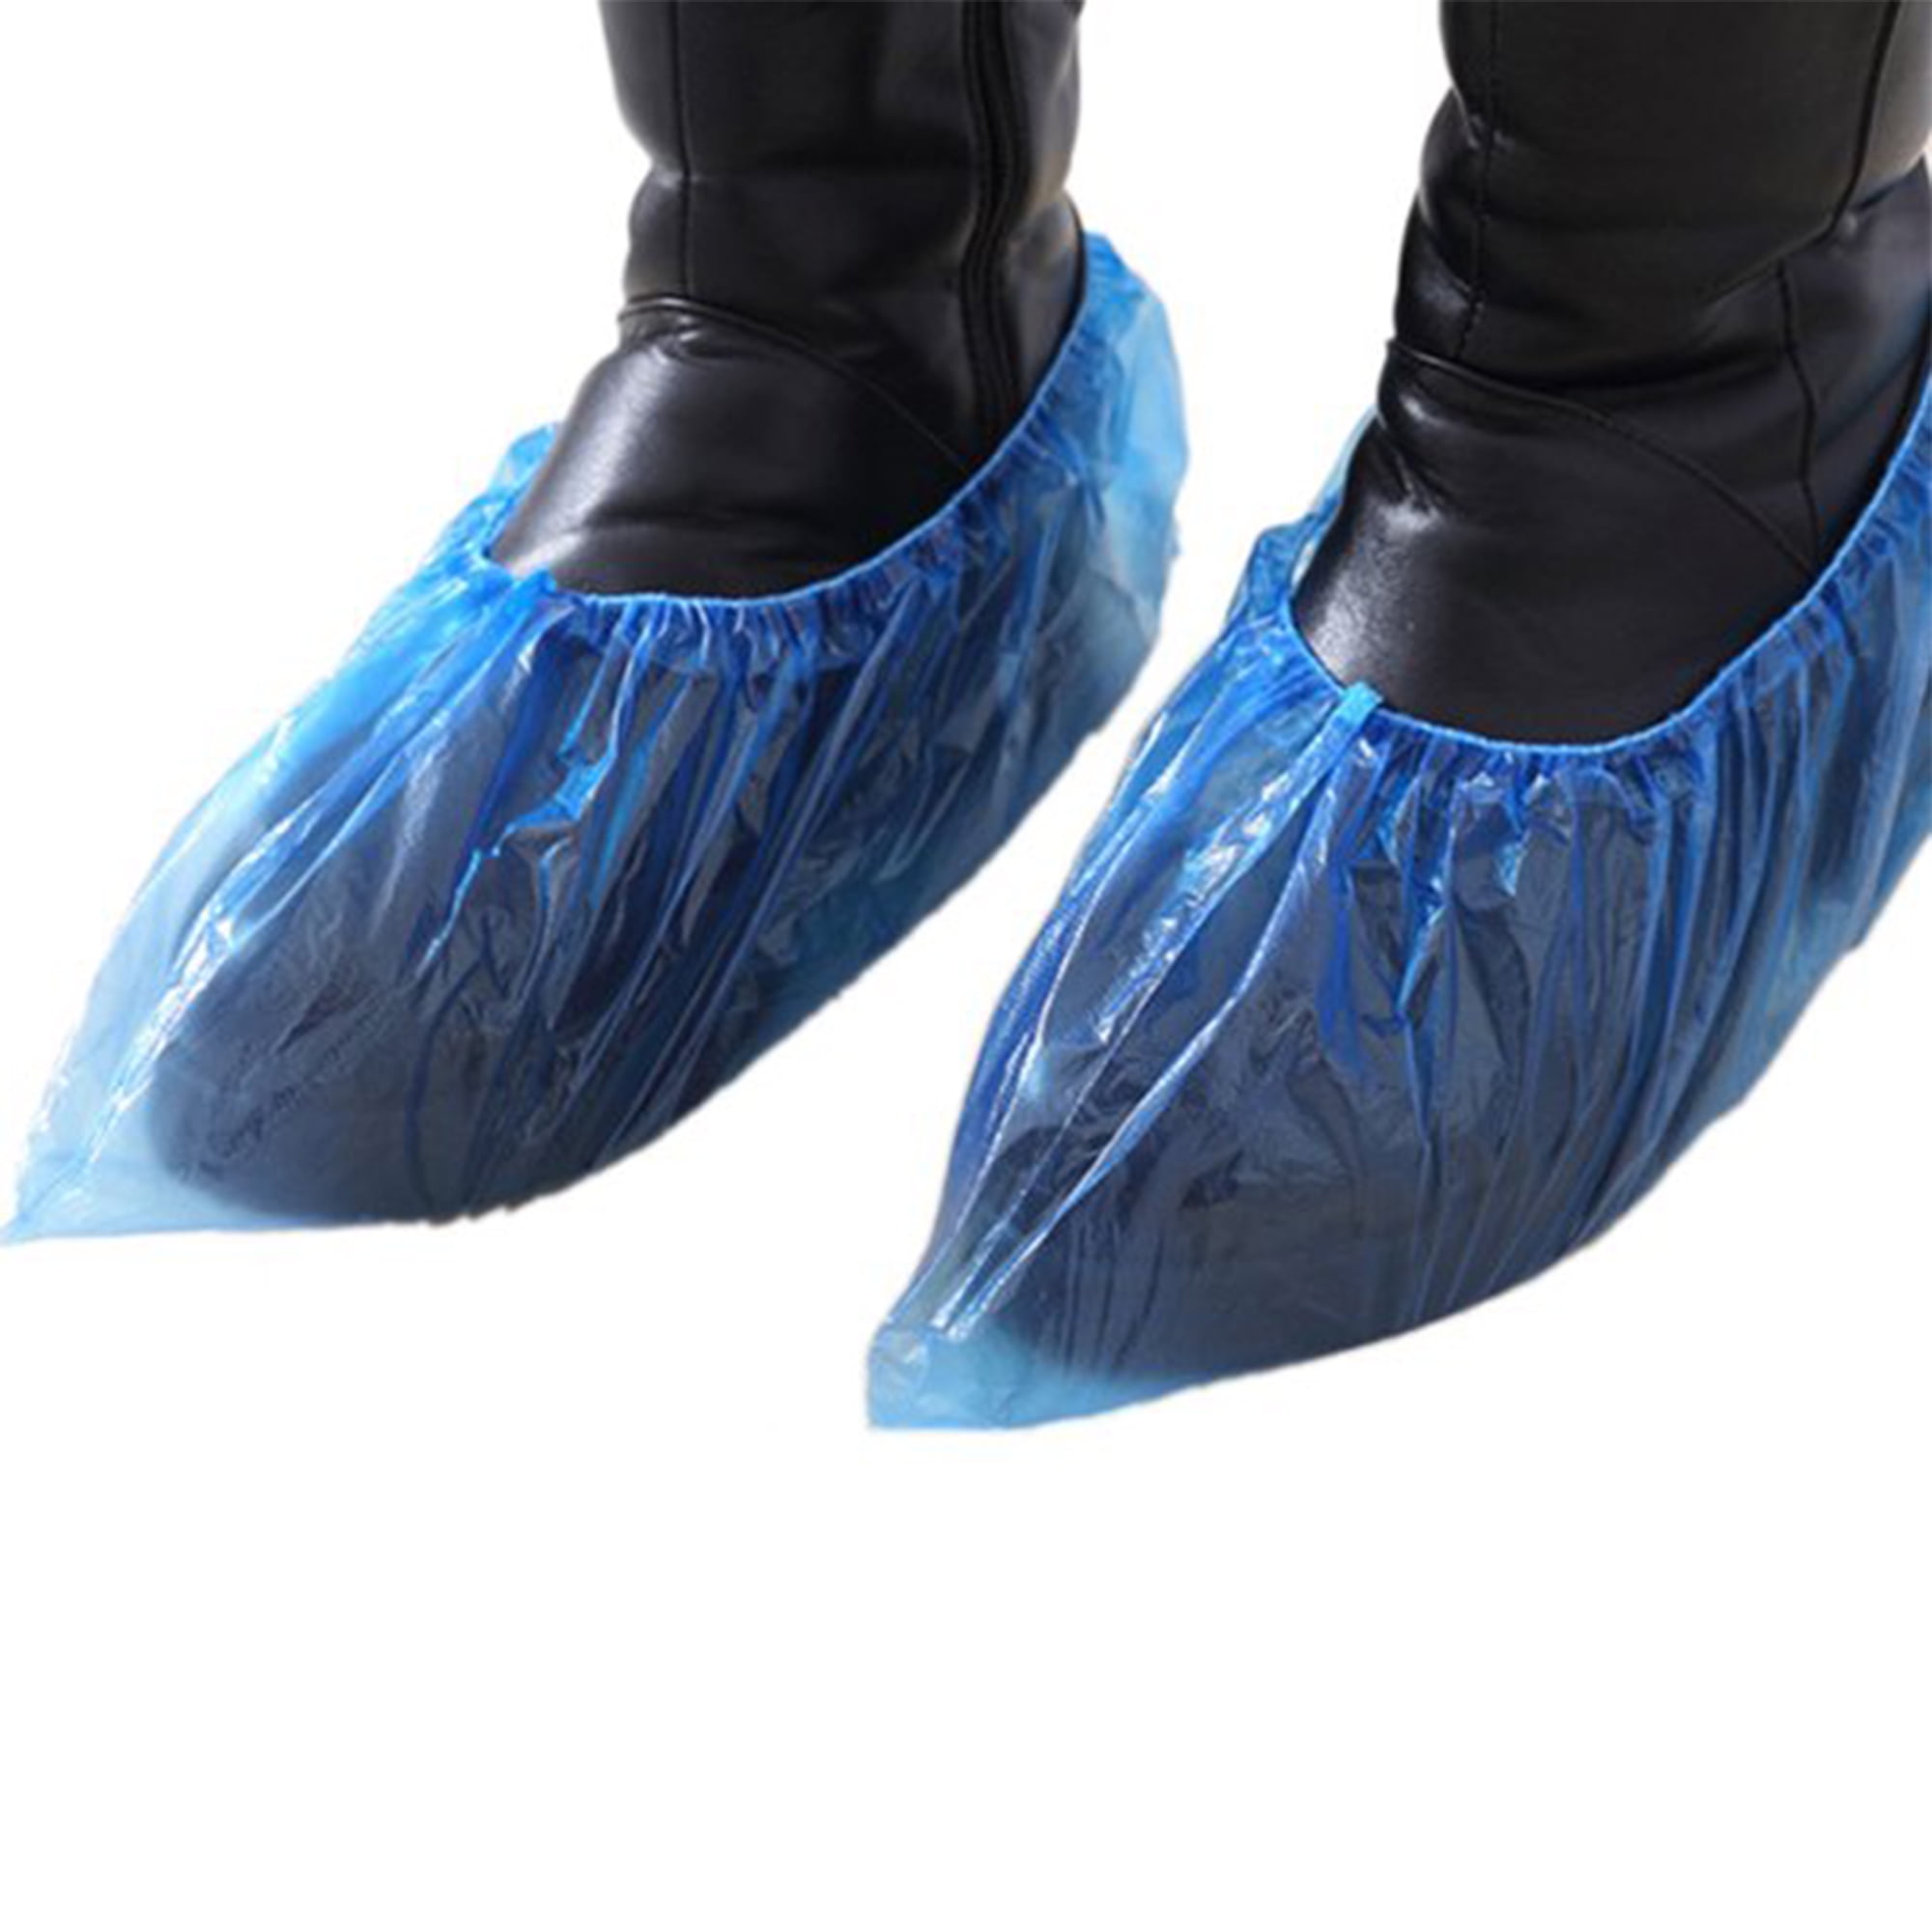 100PCS Shoe Covers Non Slip Disposable Floor Protectors ONE SIZE Blue Pink 